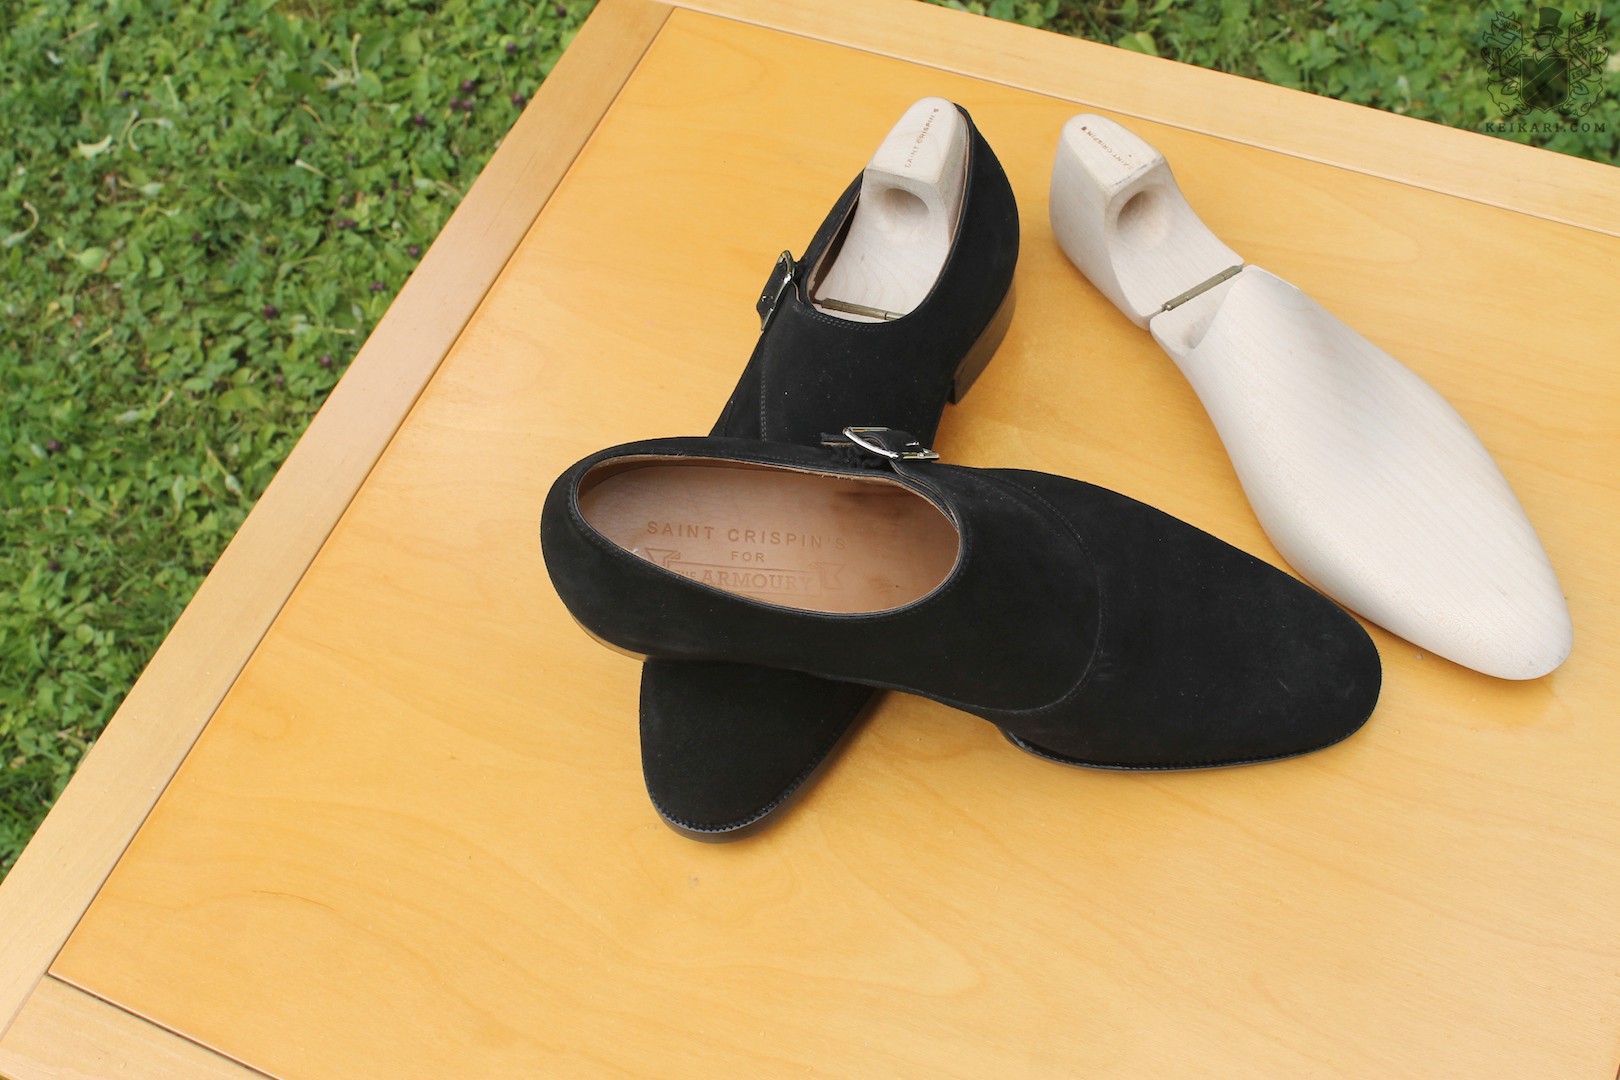 Saint_Crispins_black_suede_monk_shoes_from_Keikari_dot_com14.jpg